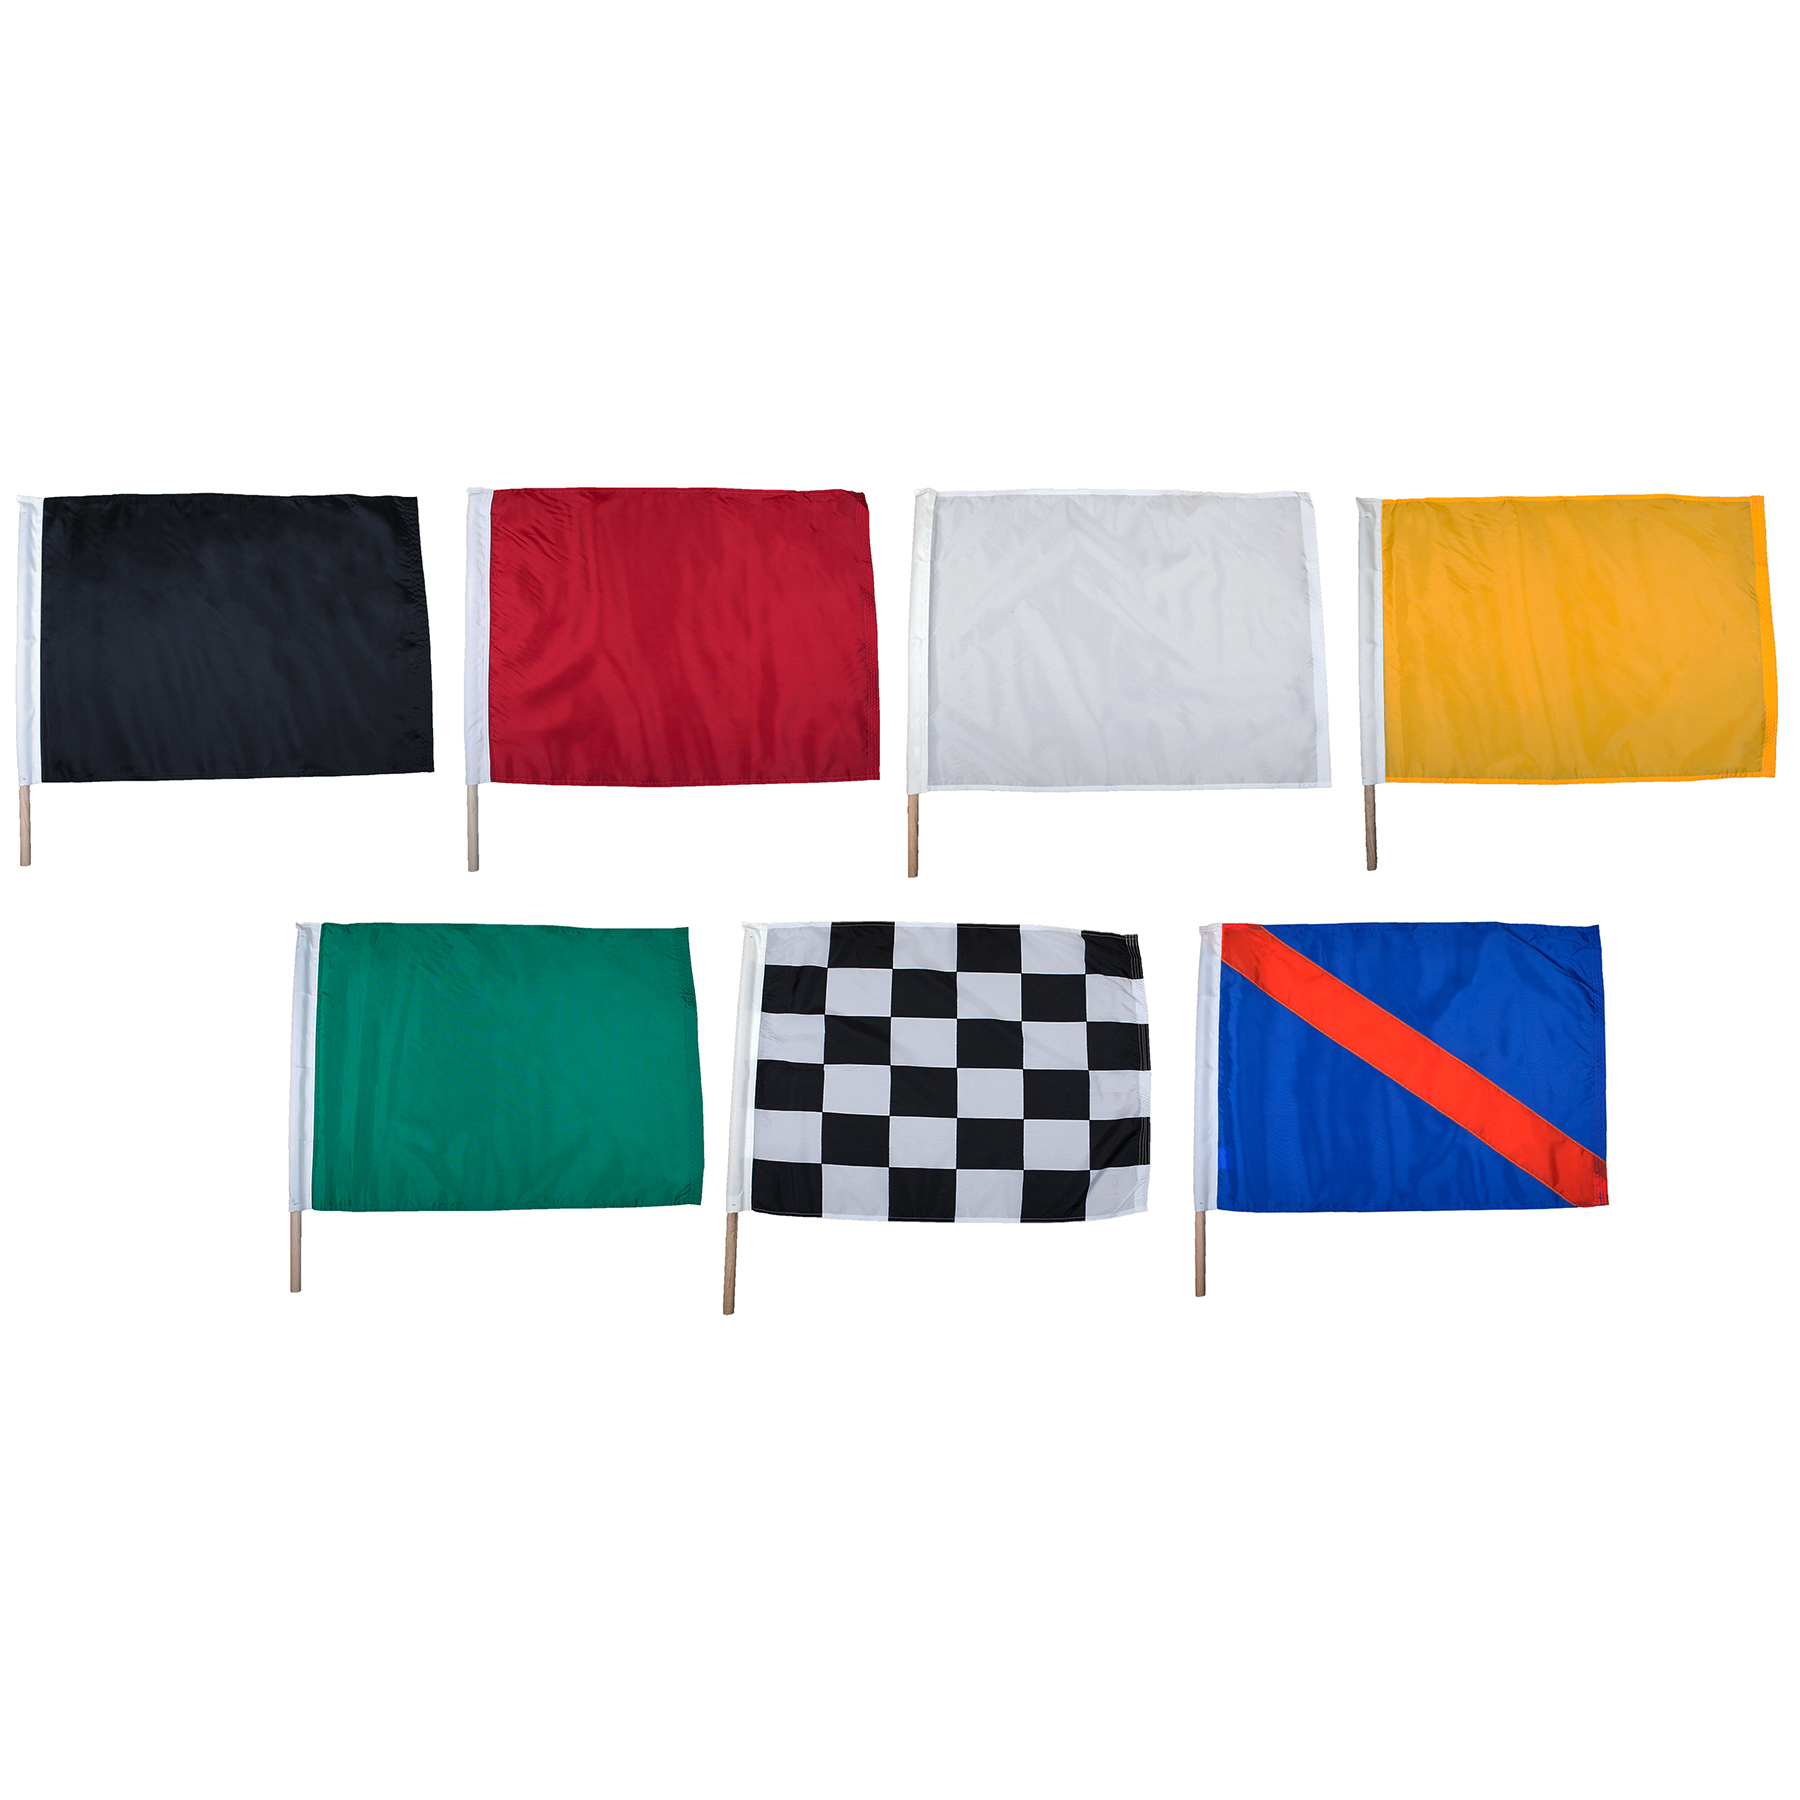 Racing Flag Set 6  24" x 30" Official Size Race Track Flags Heavy Duty Nylon